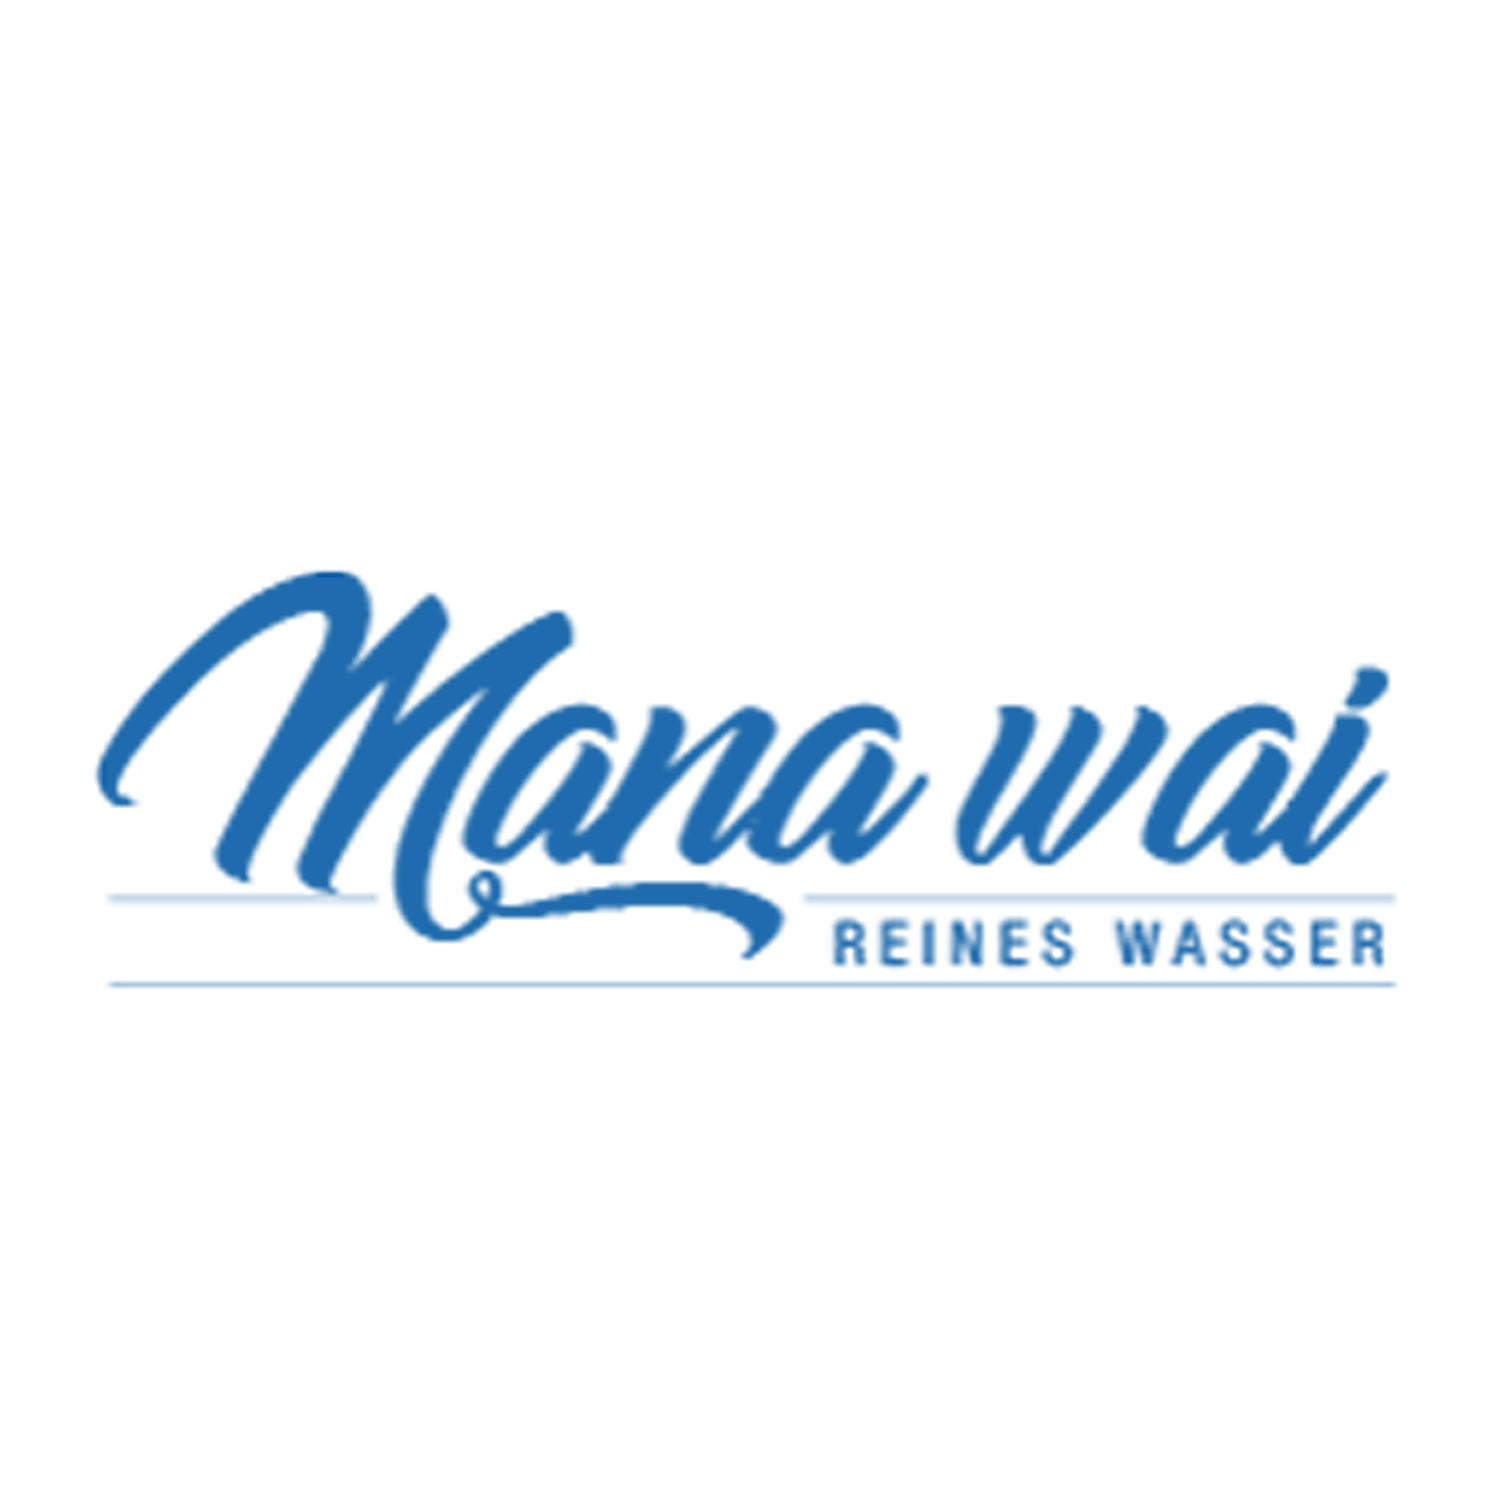 Mana wai Logo